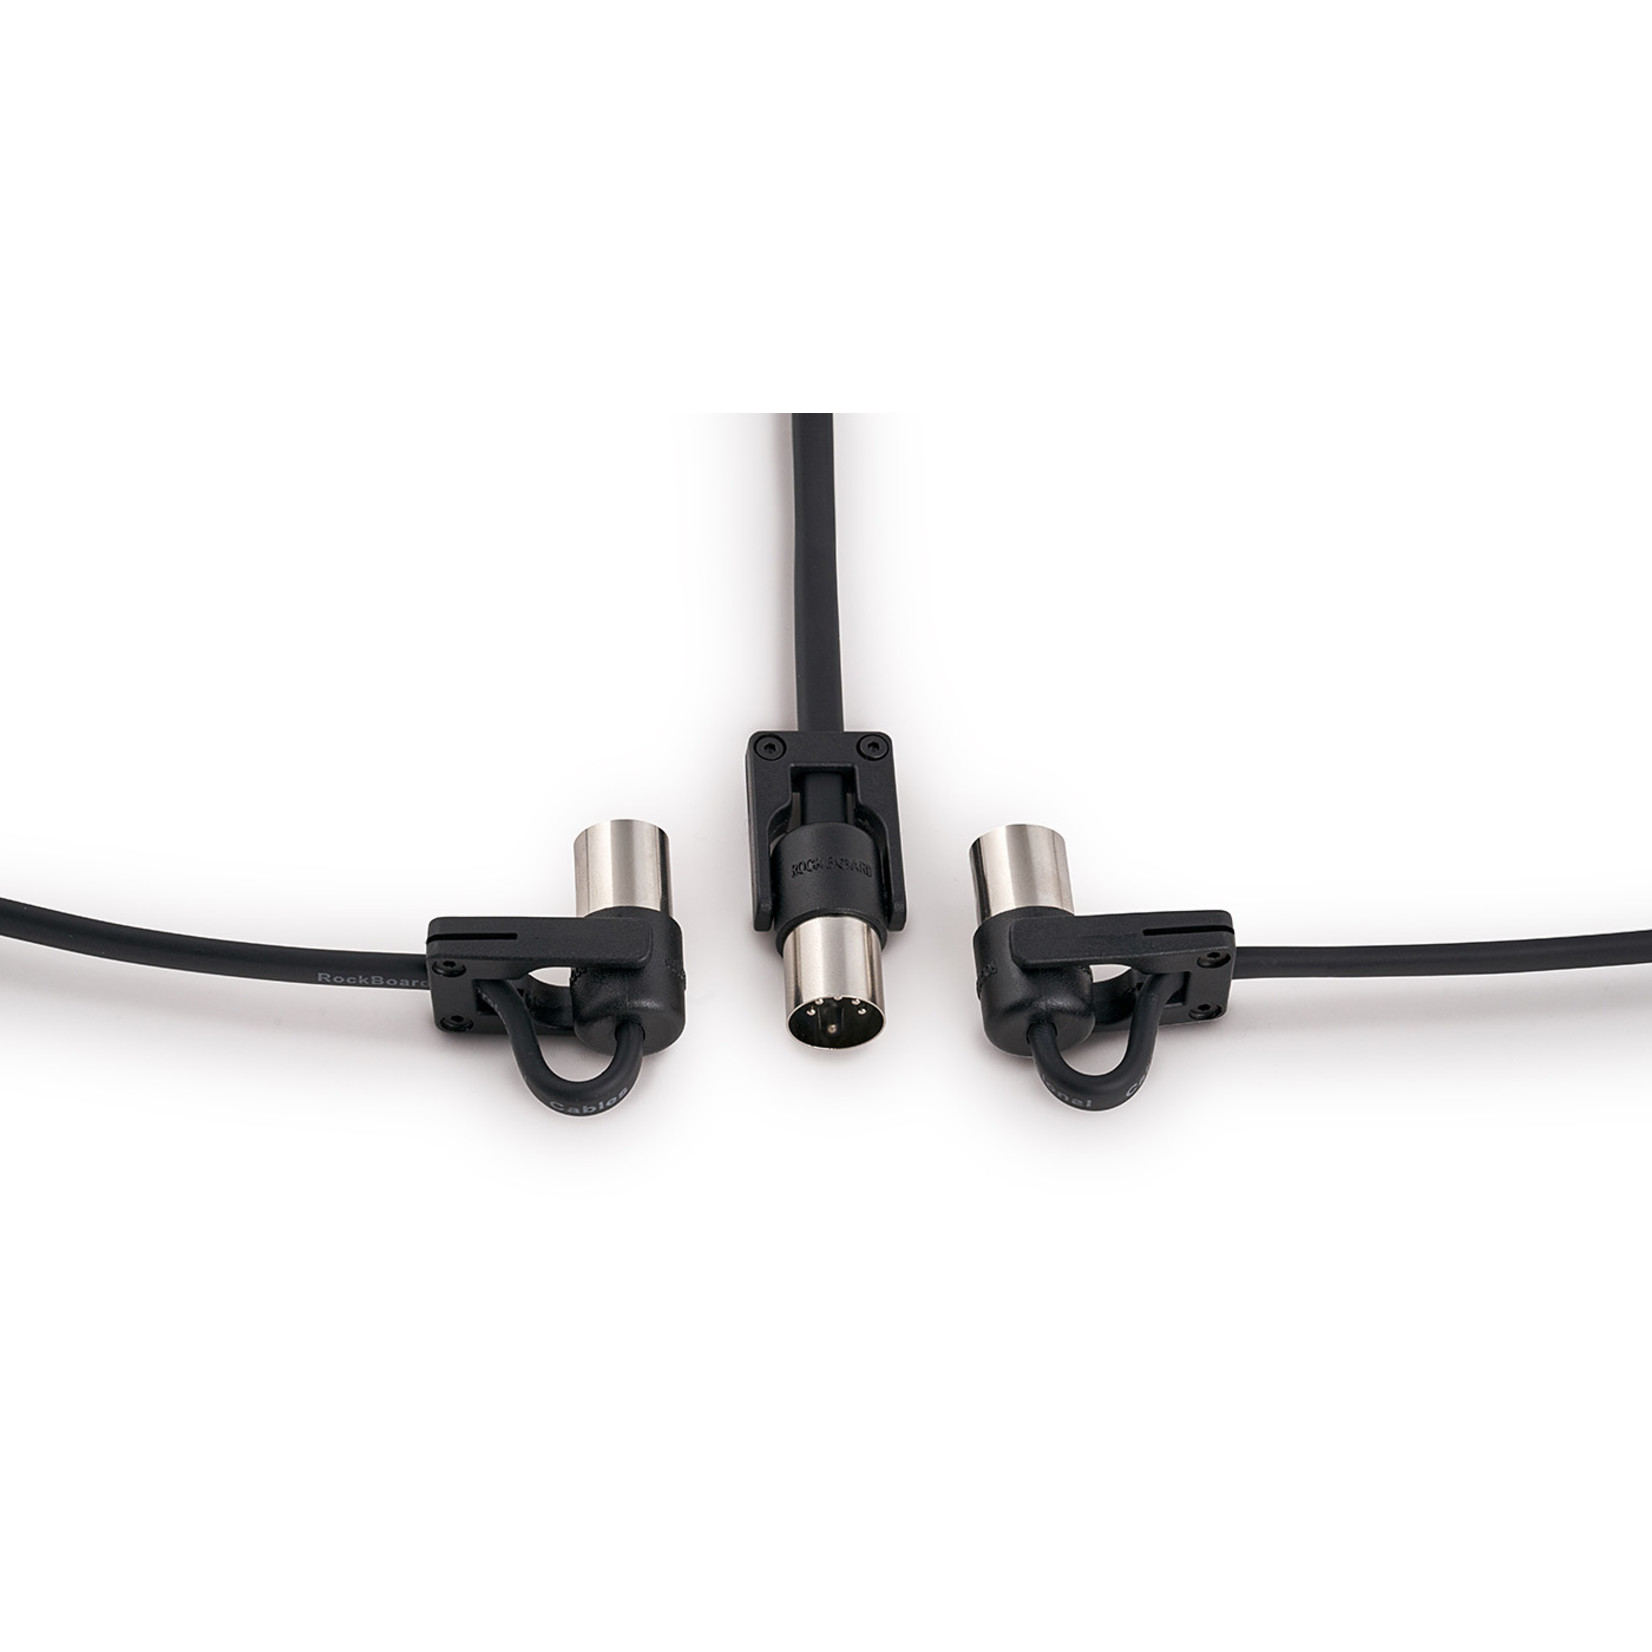 Rockboard RockBoard FlaX Plug 500cm (16.40') flat MIDI Cable - angle or straight (RBO CAB MD FX 500 BK)